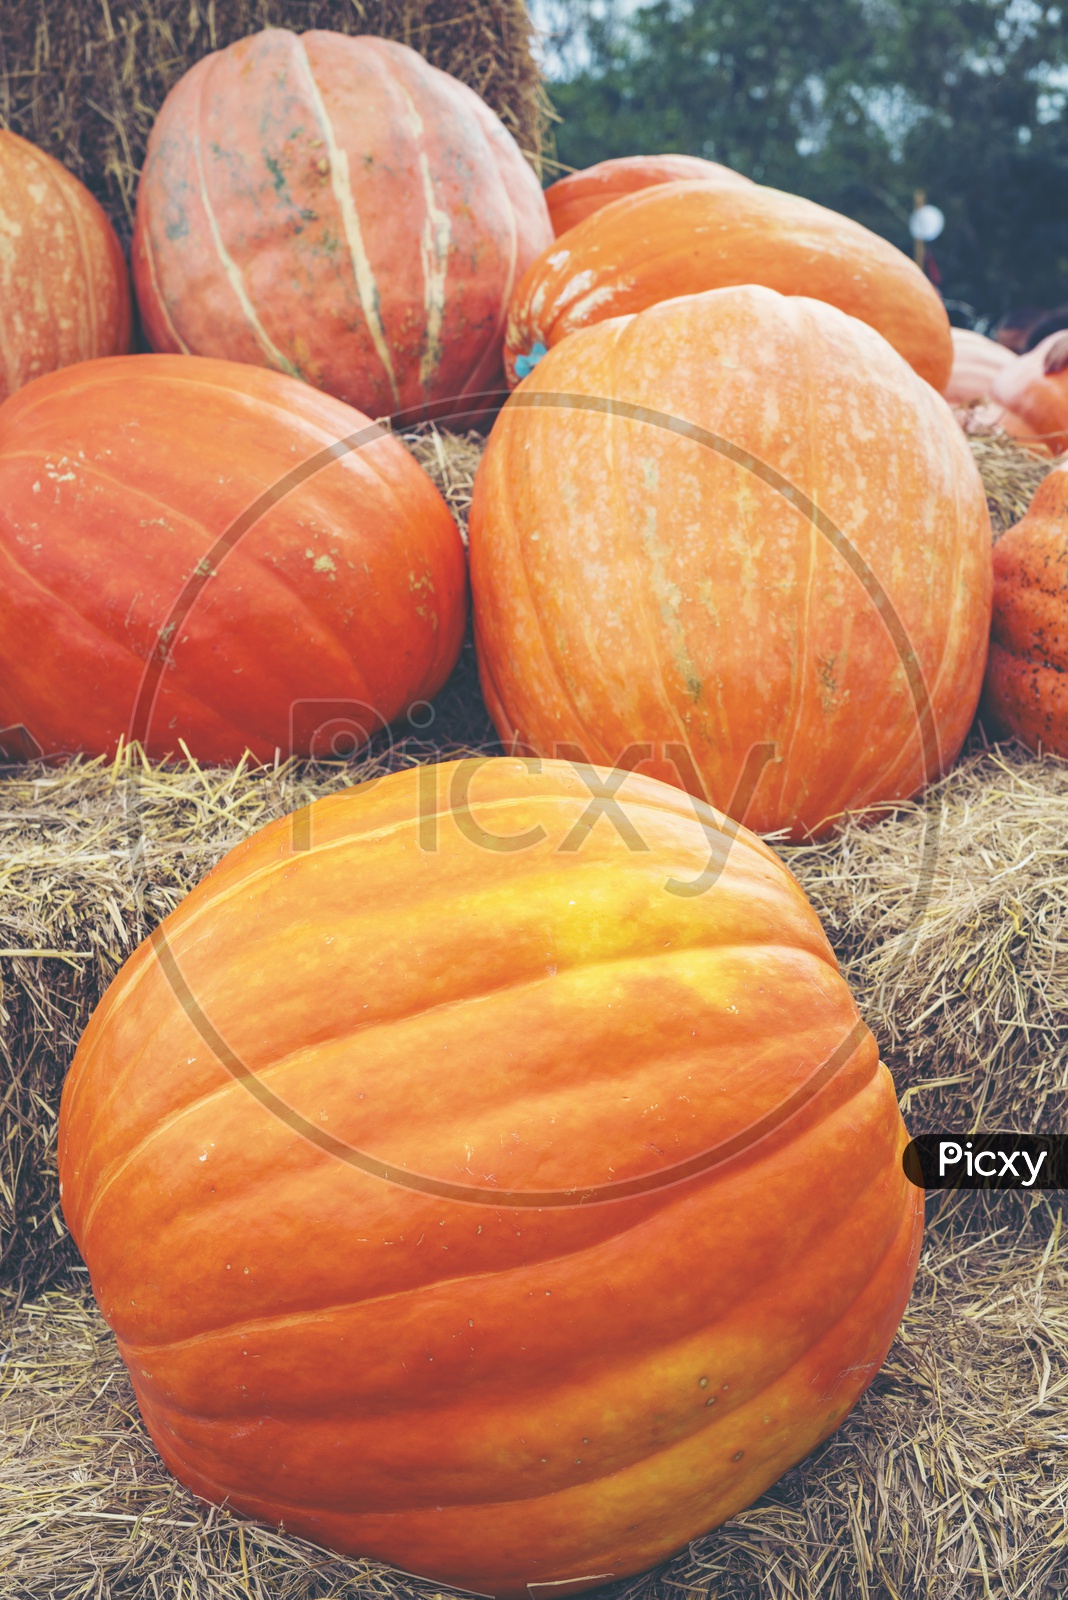 Great Pumpkin Harvest With Big Pumpkins Forming Halloween Backgrounds